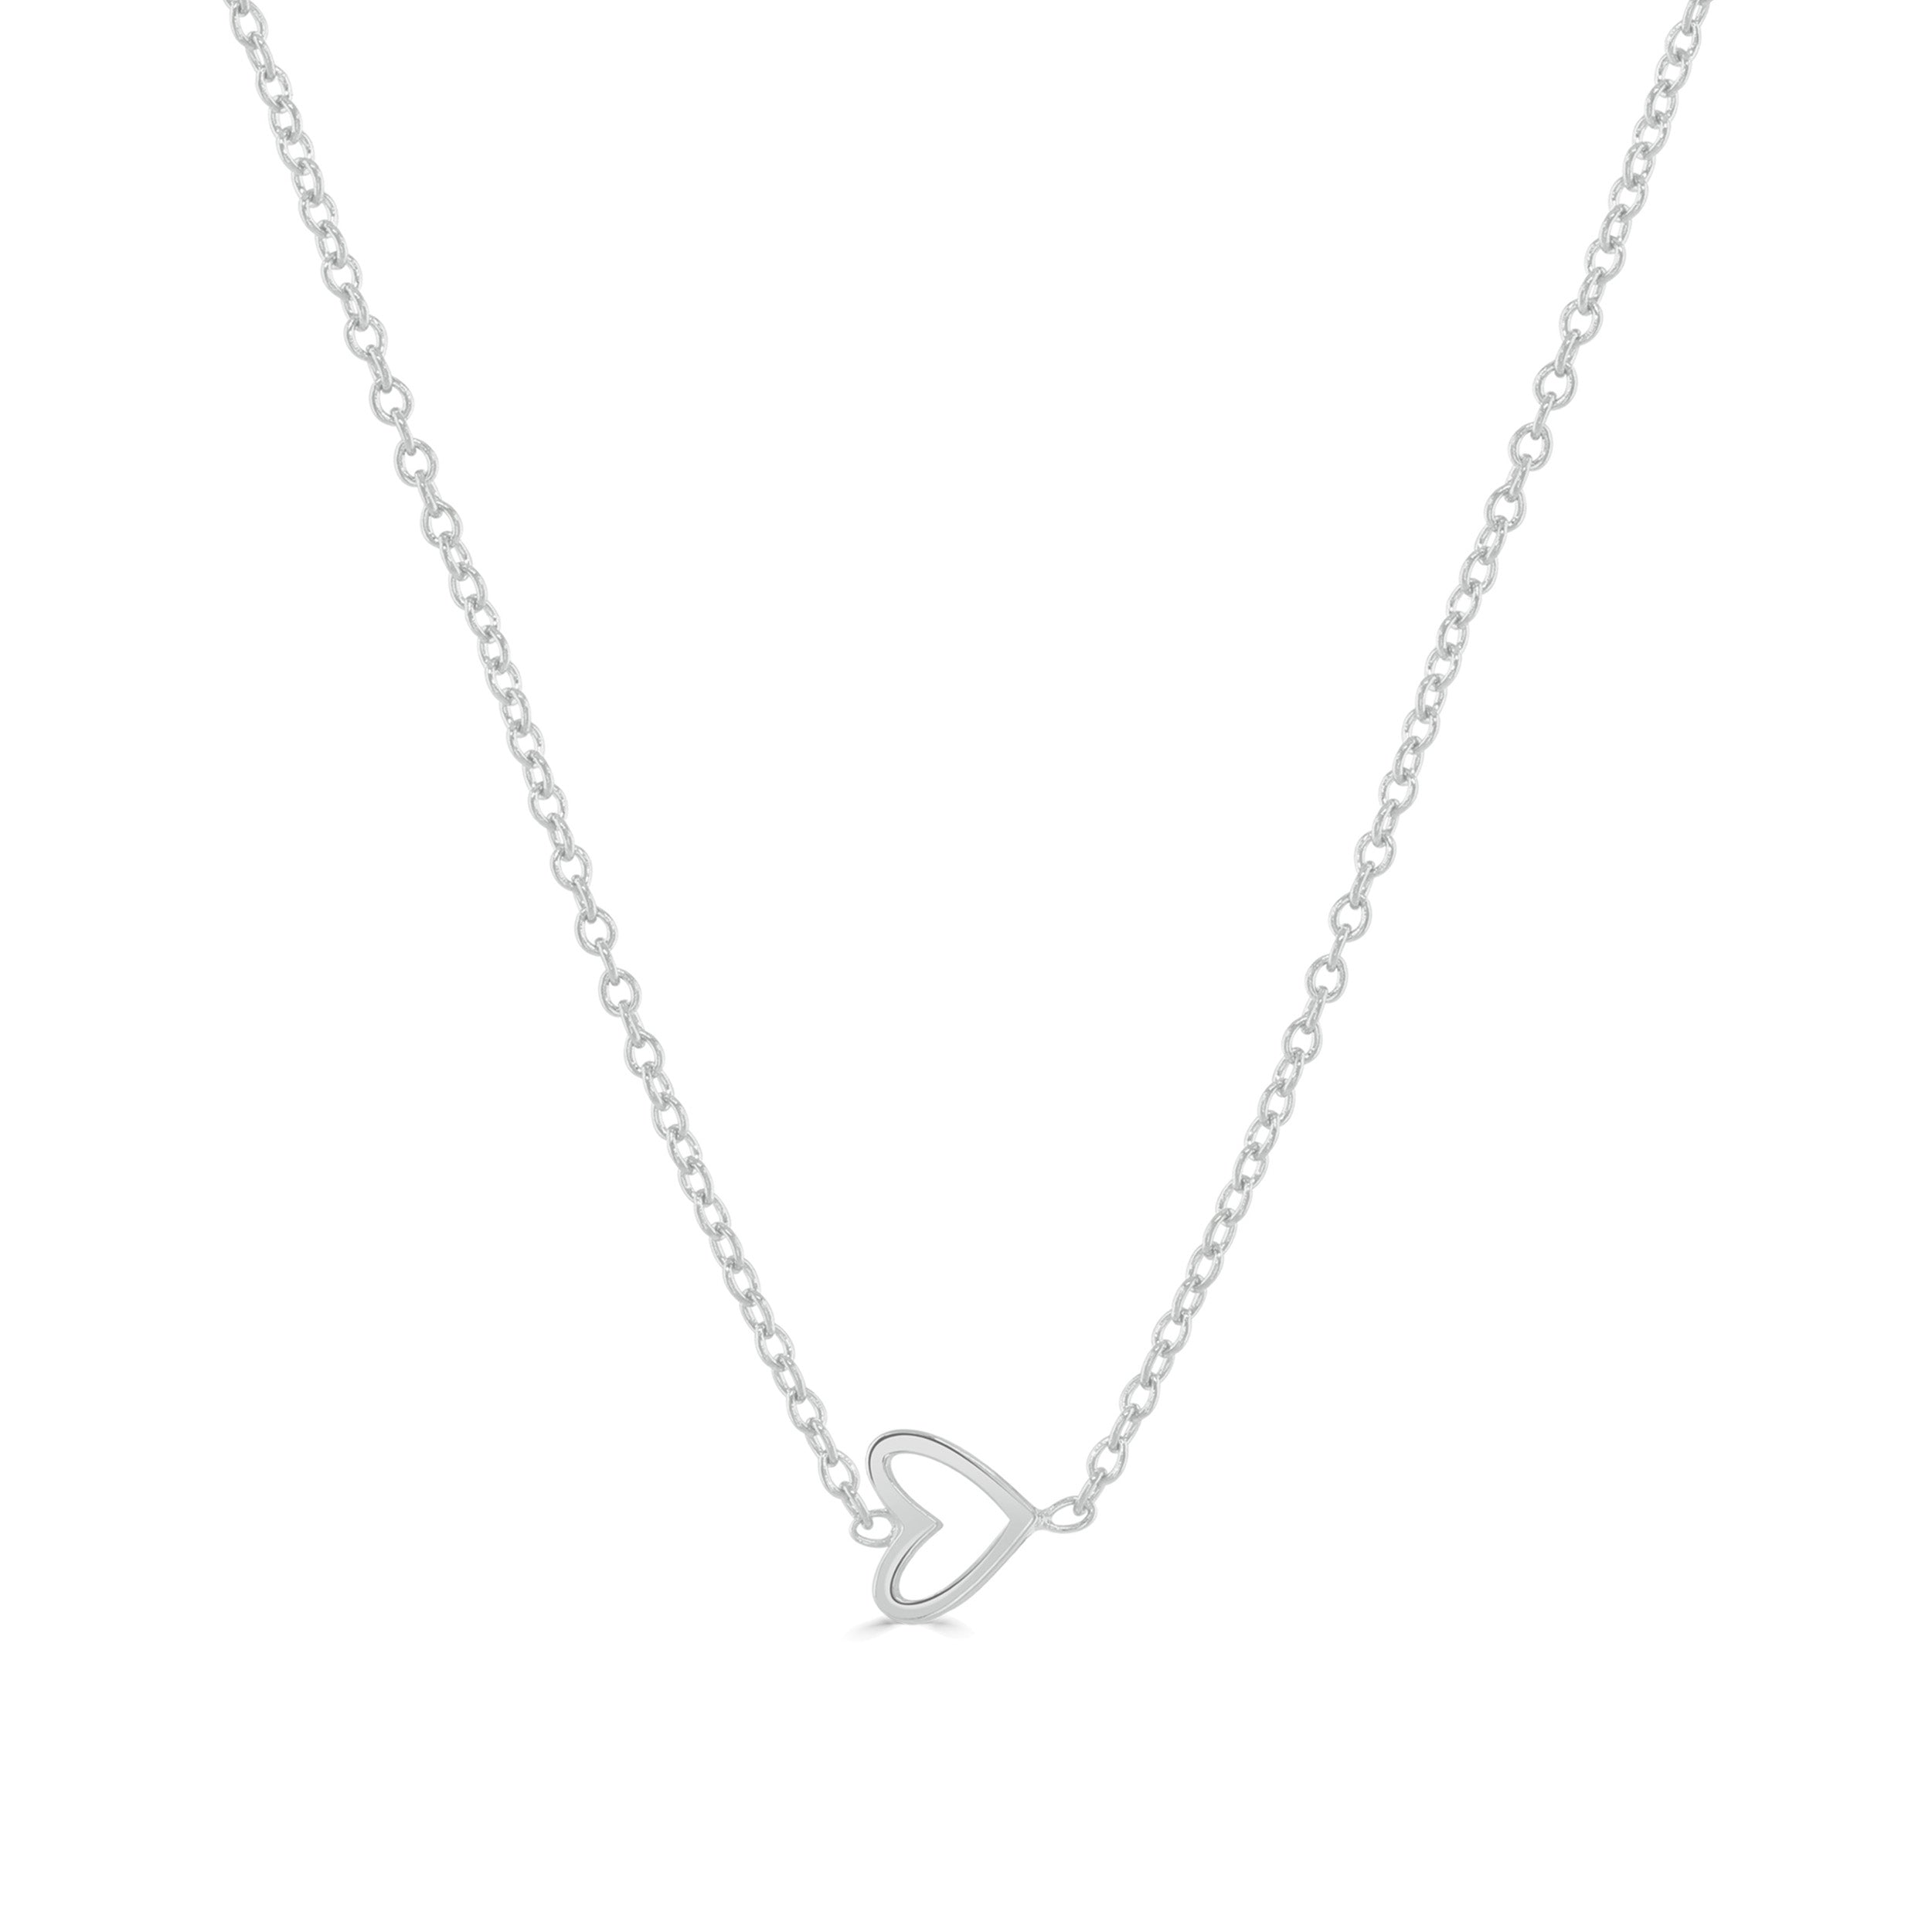 Silver Rachel Stevens Heart Necklace